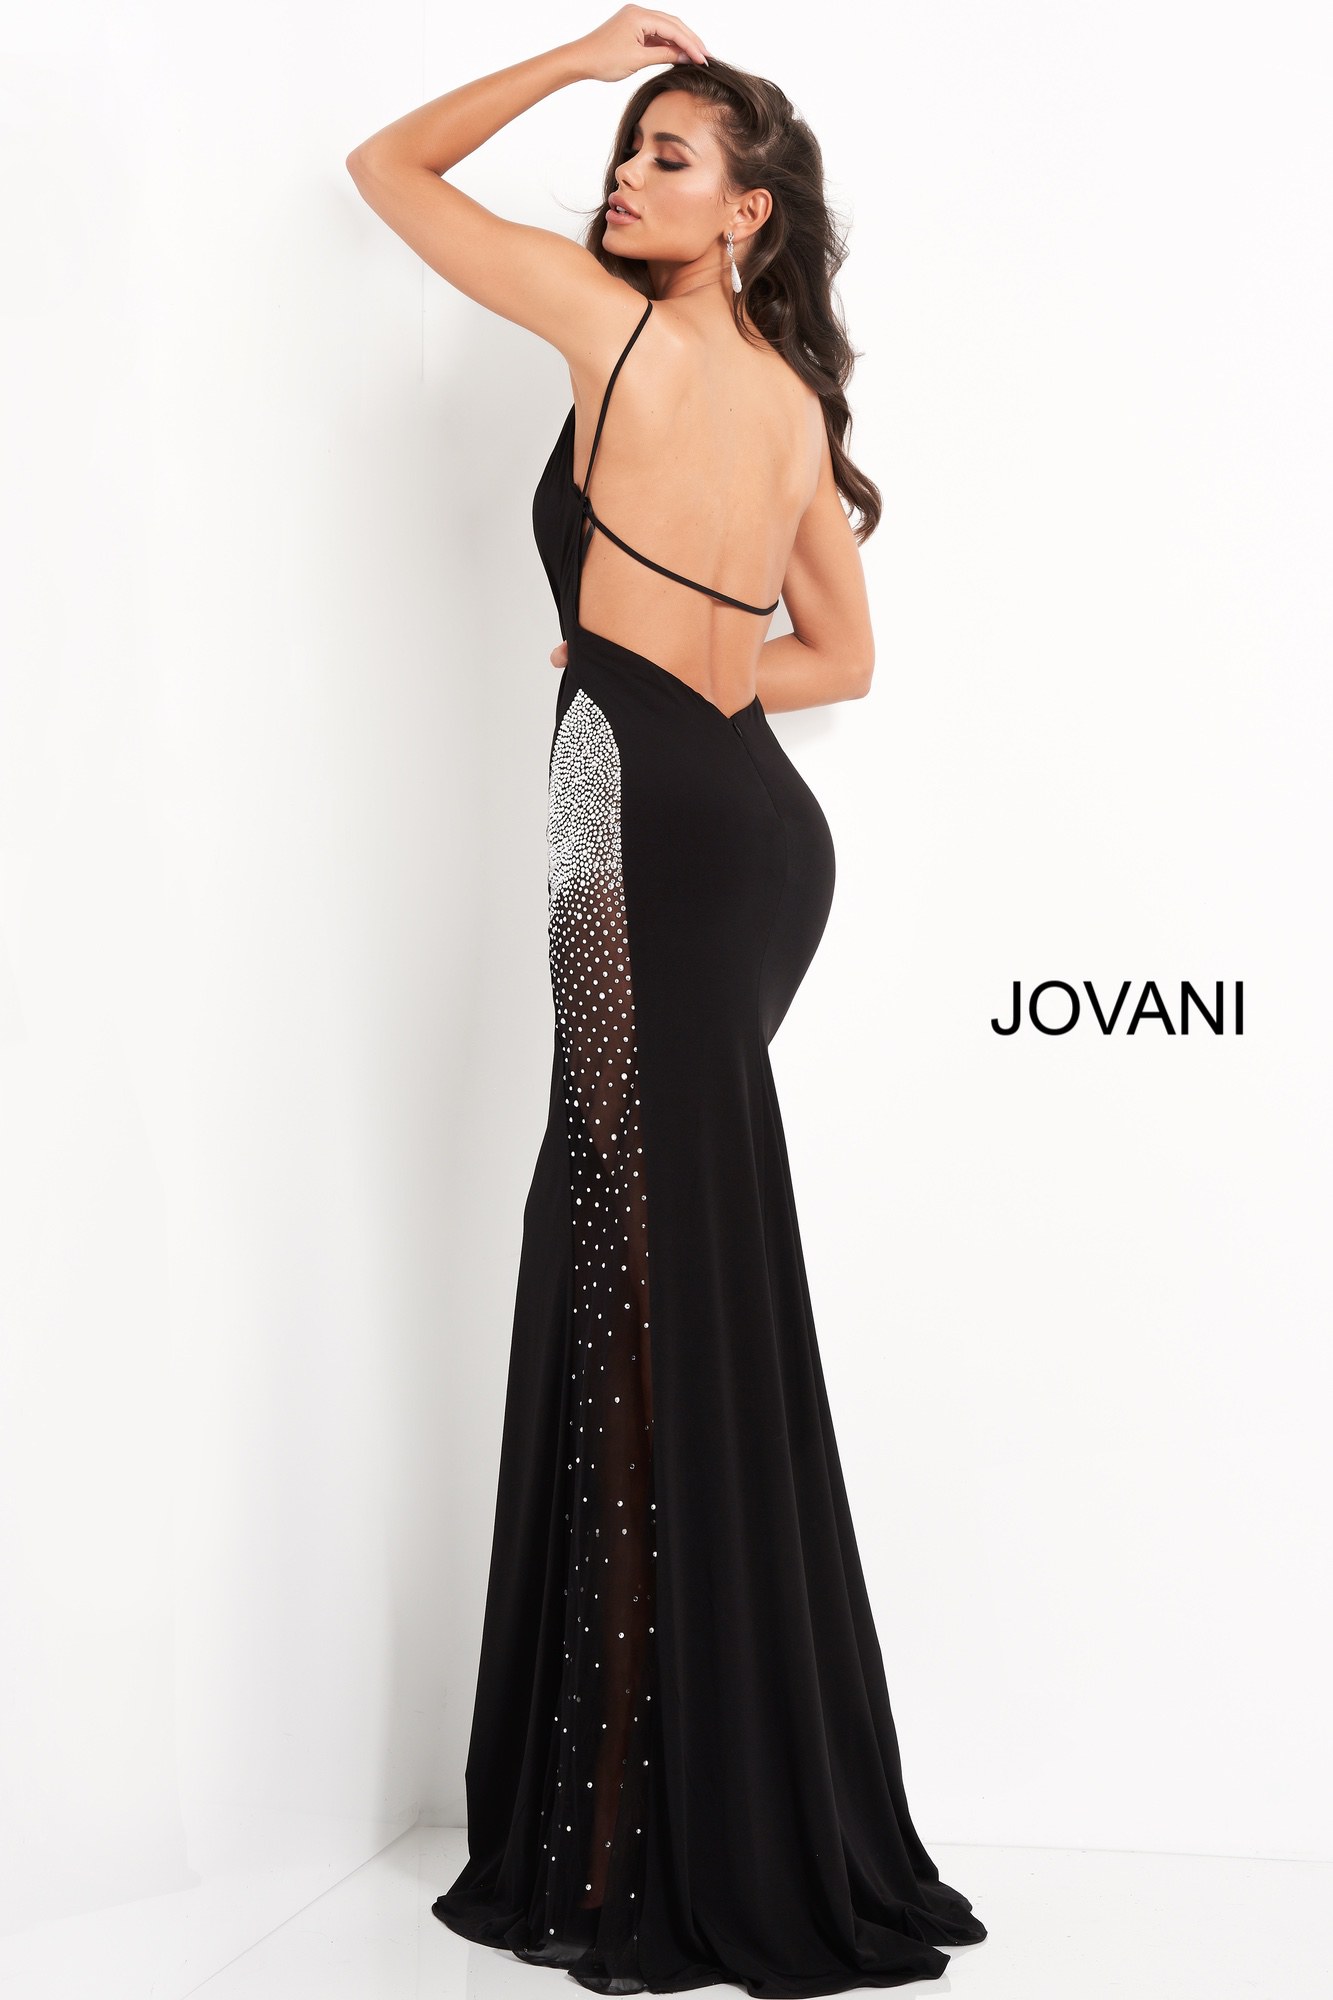 Jovani 06566 | Black Beaded Sides Sheath Prom Dress